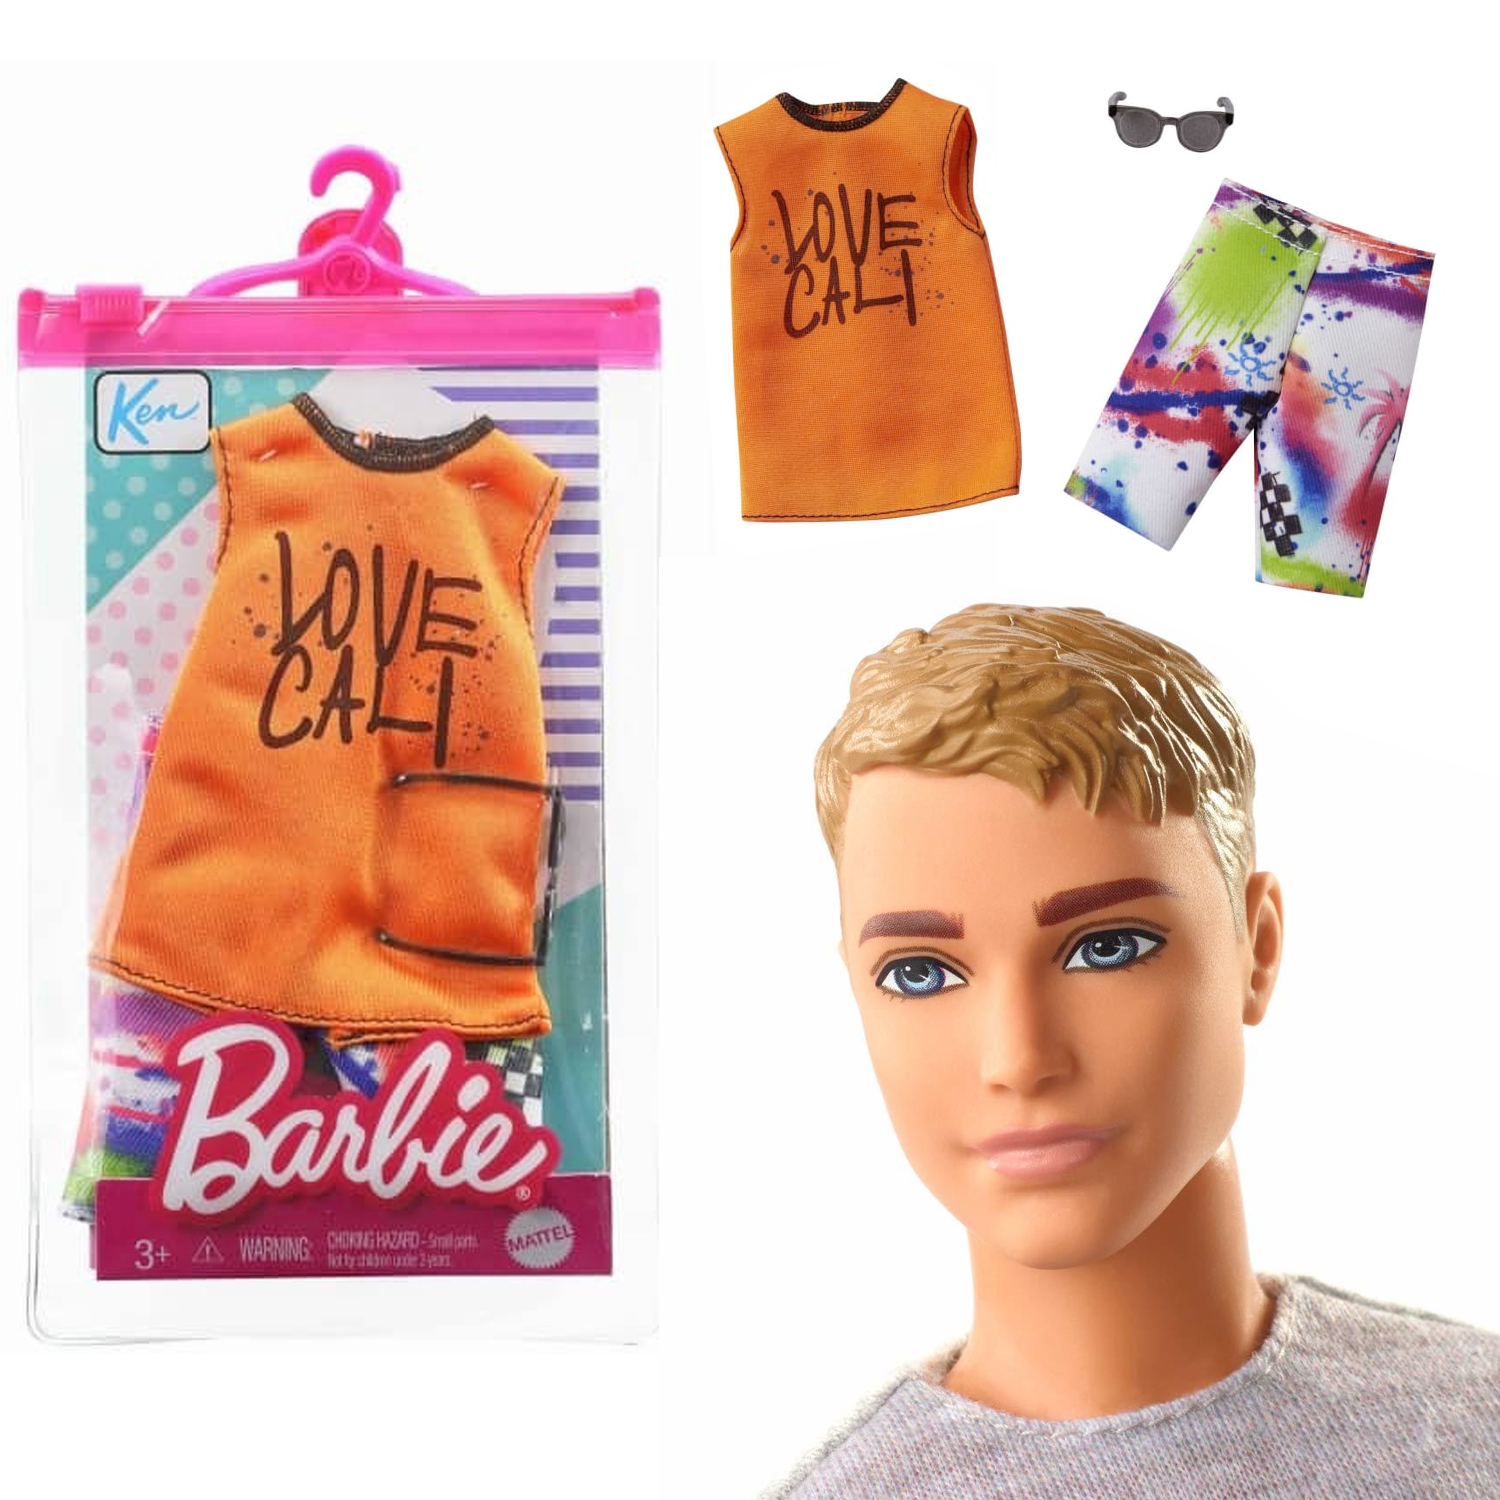 Одежда и аксессуары для куклы Barbie Кен, GRC77